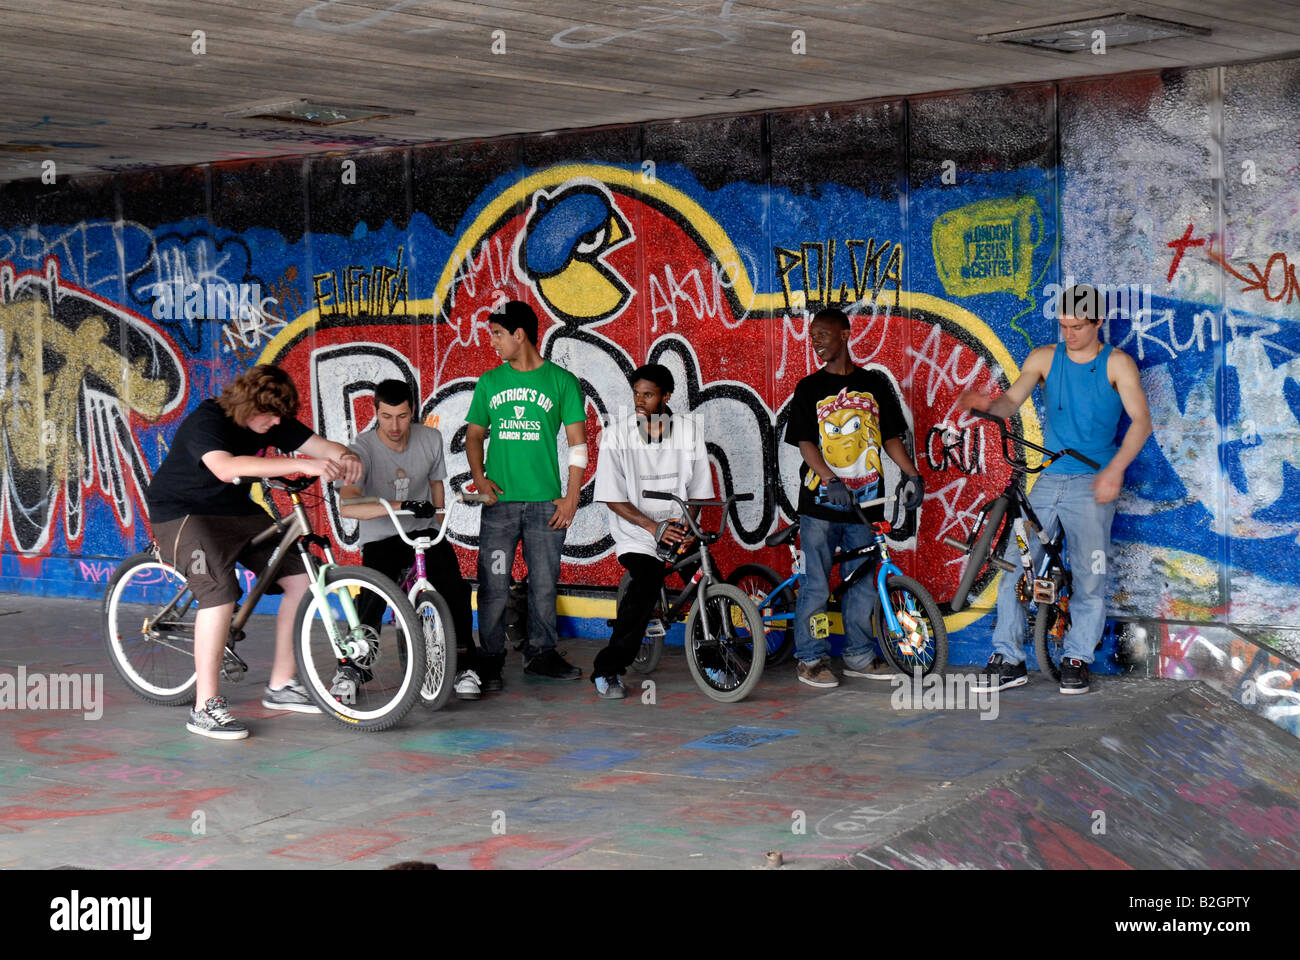 Youth on BMX bikes at South Bank skate Park Stock Photo